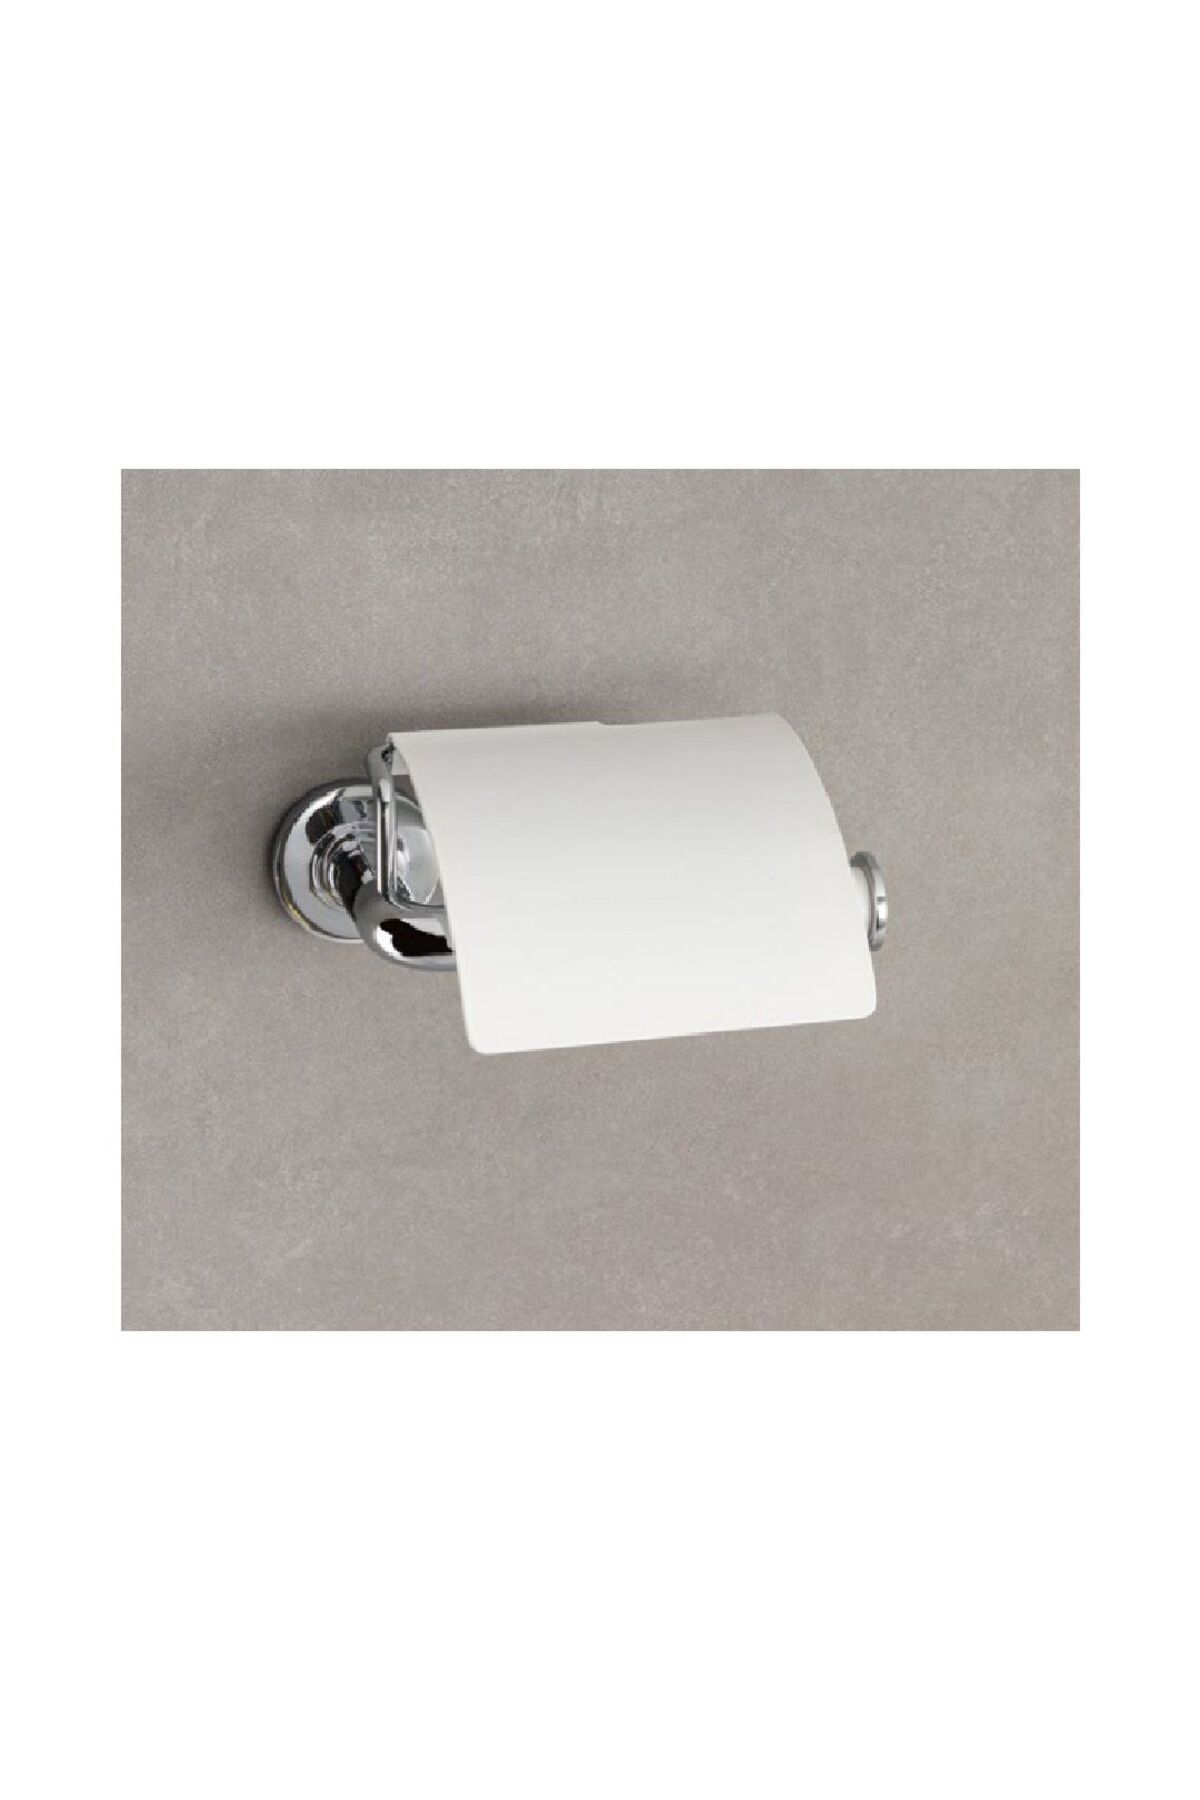 Nord Kapaklı Tuvalet Kağıtlığı Krom/Beyaz Renk 69X121X155 mm